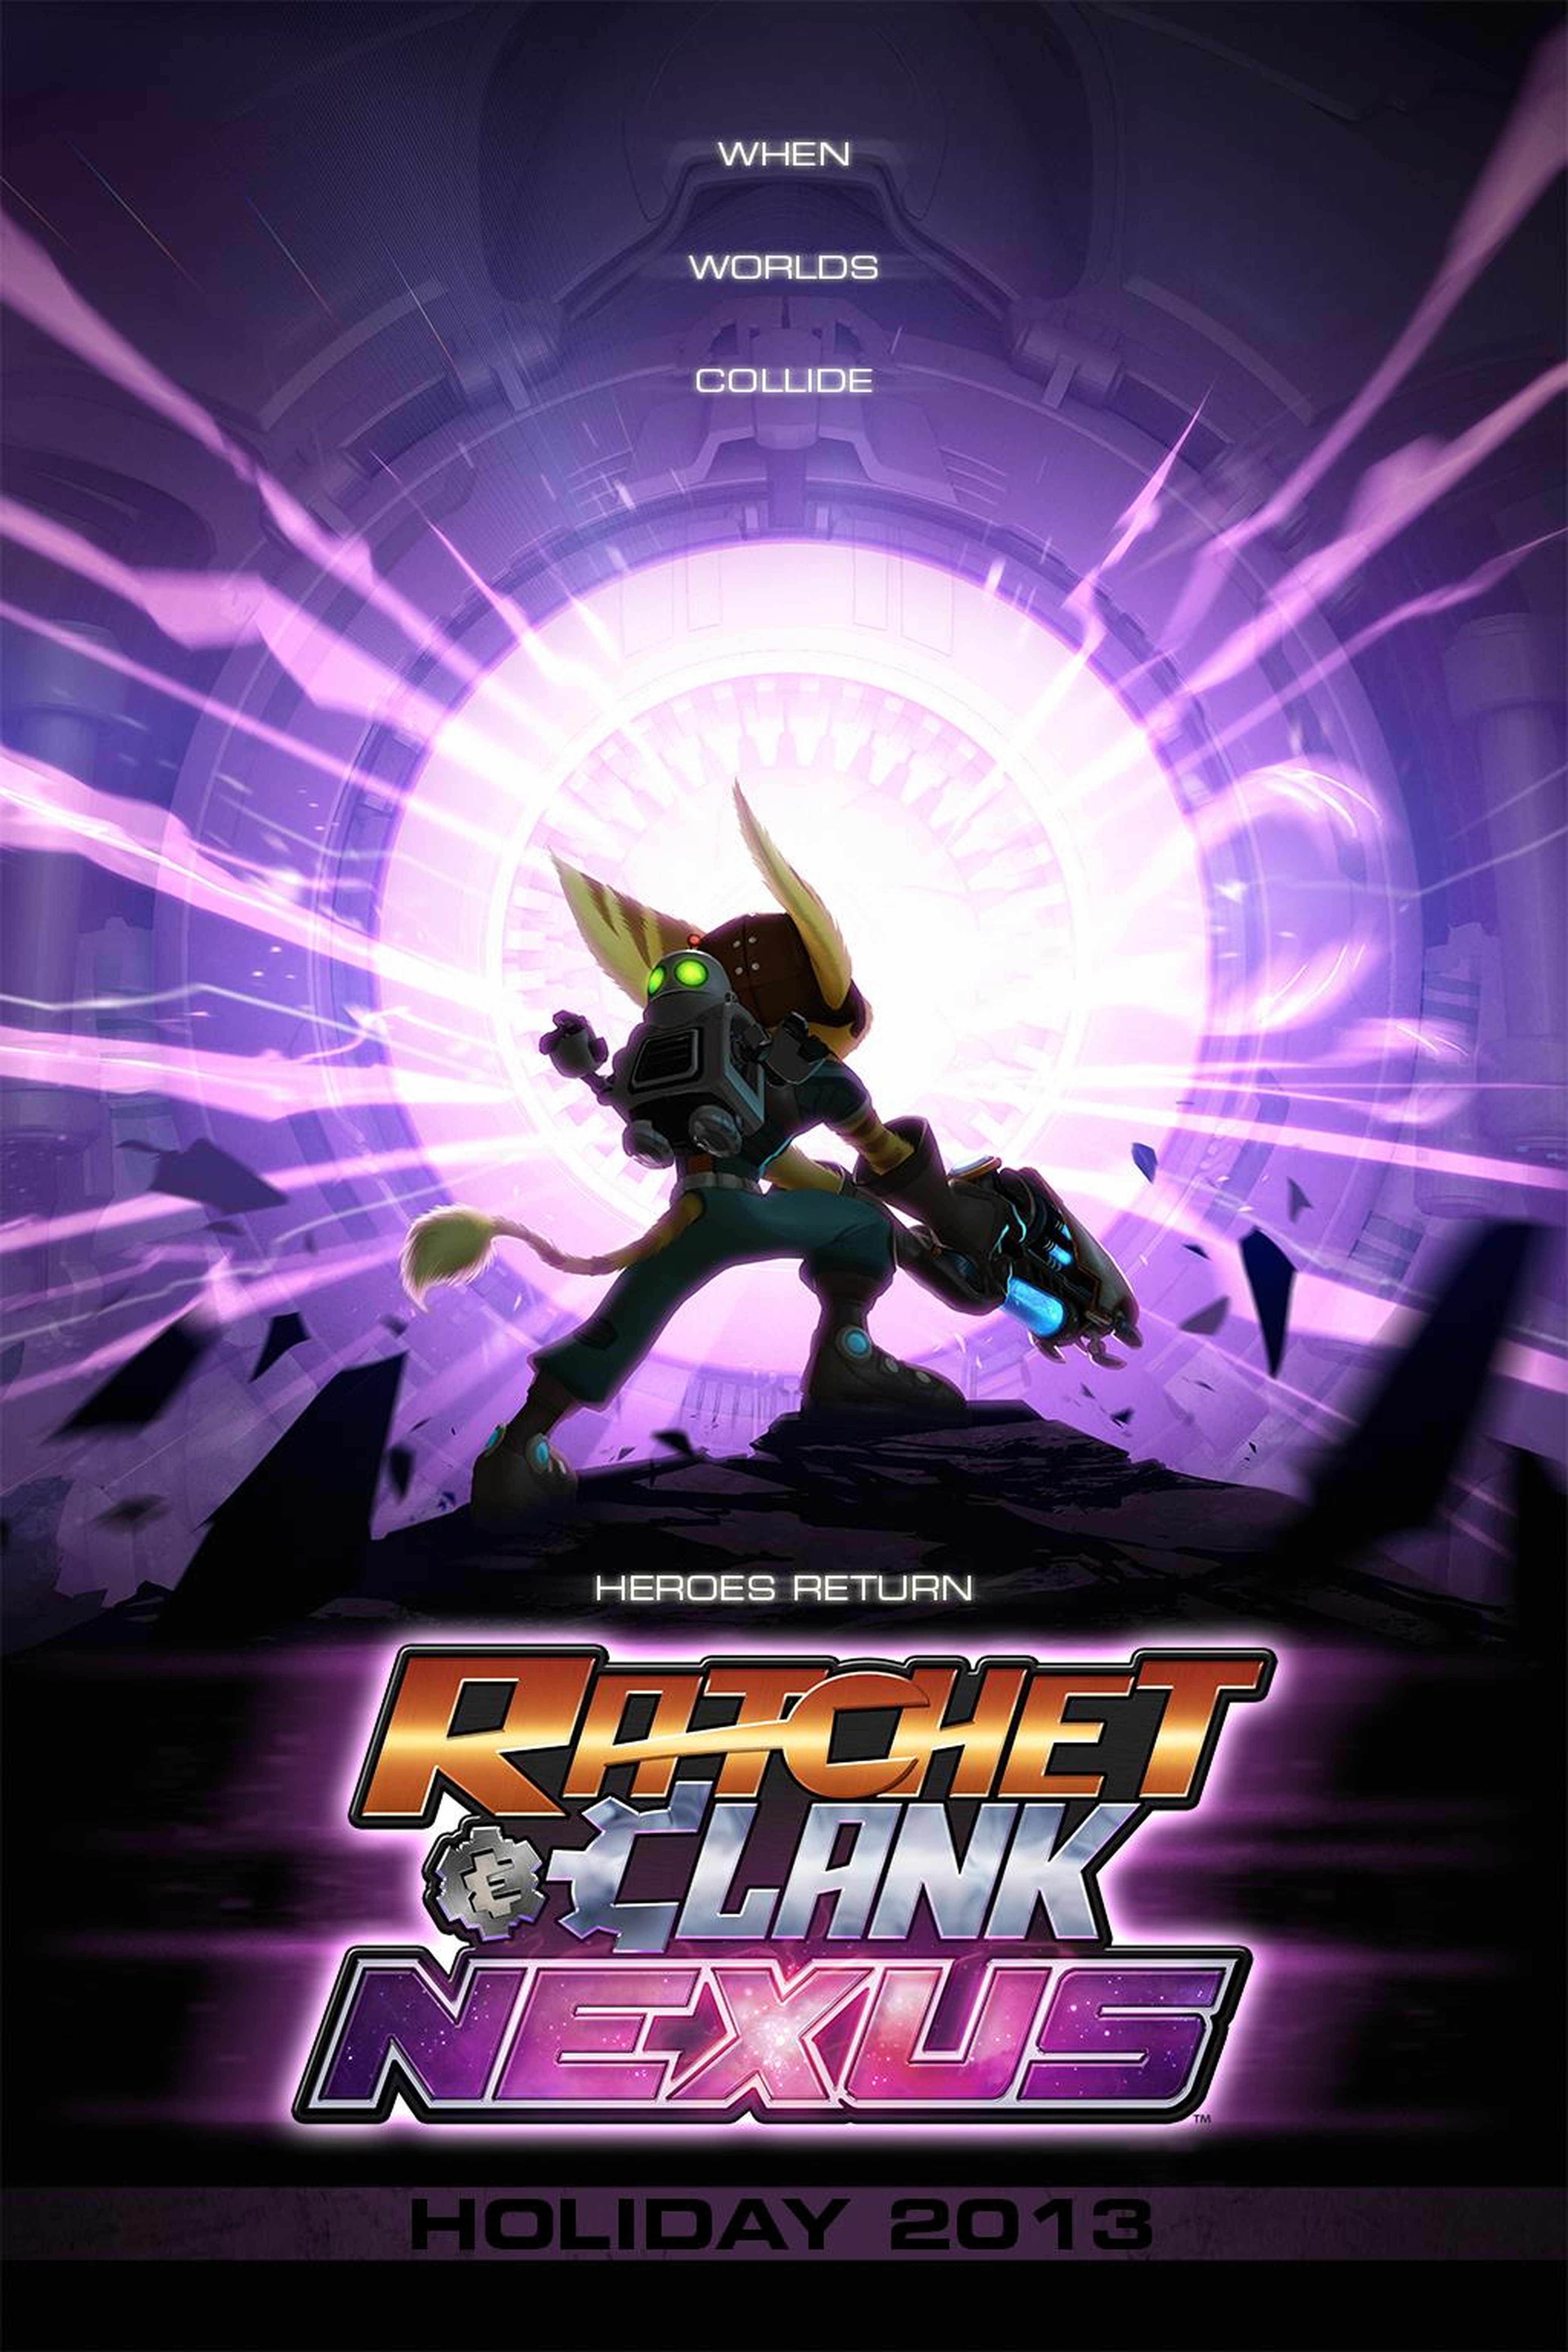 Ratchet & Clank Into the Nexus anunciado para fin de año